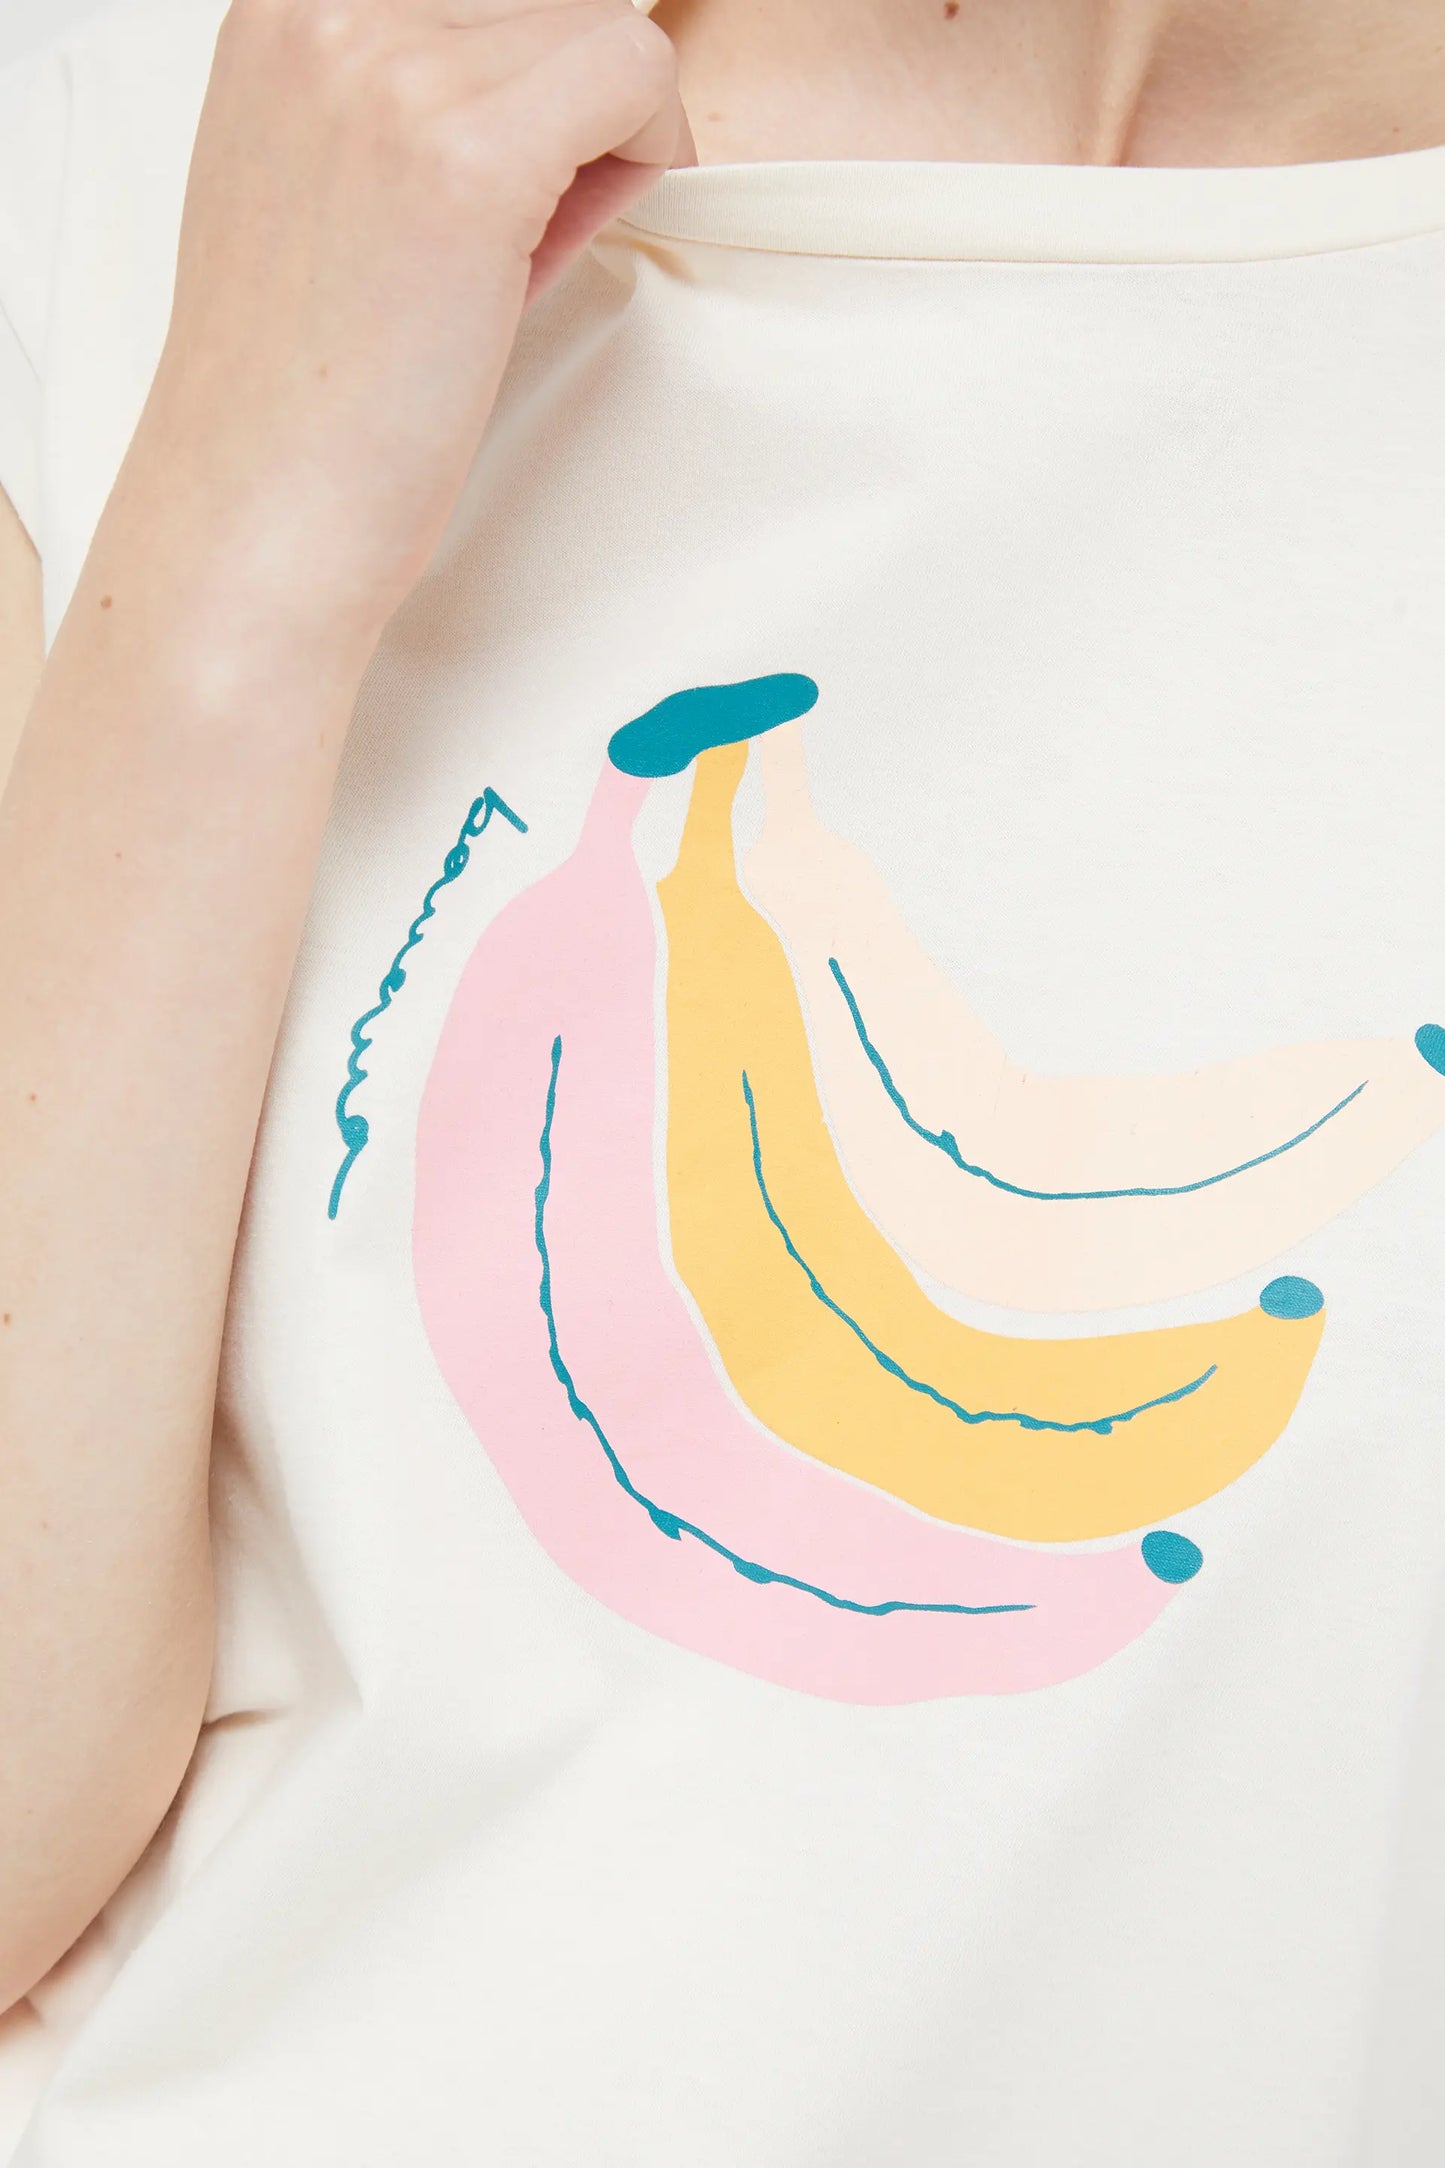 Camiseta print plátano blanca